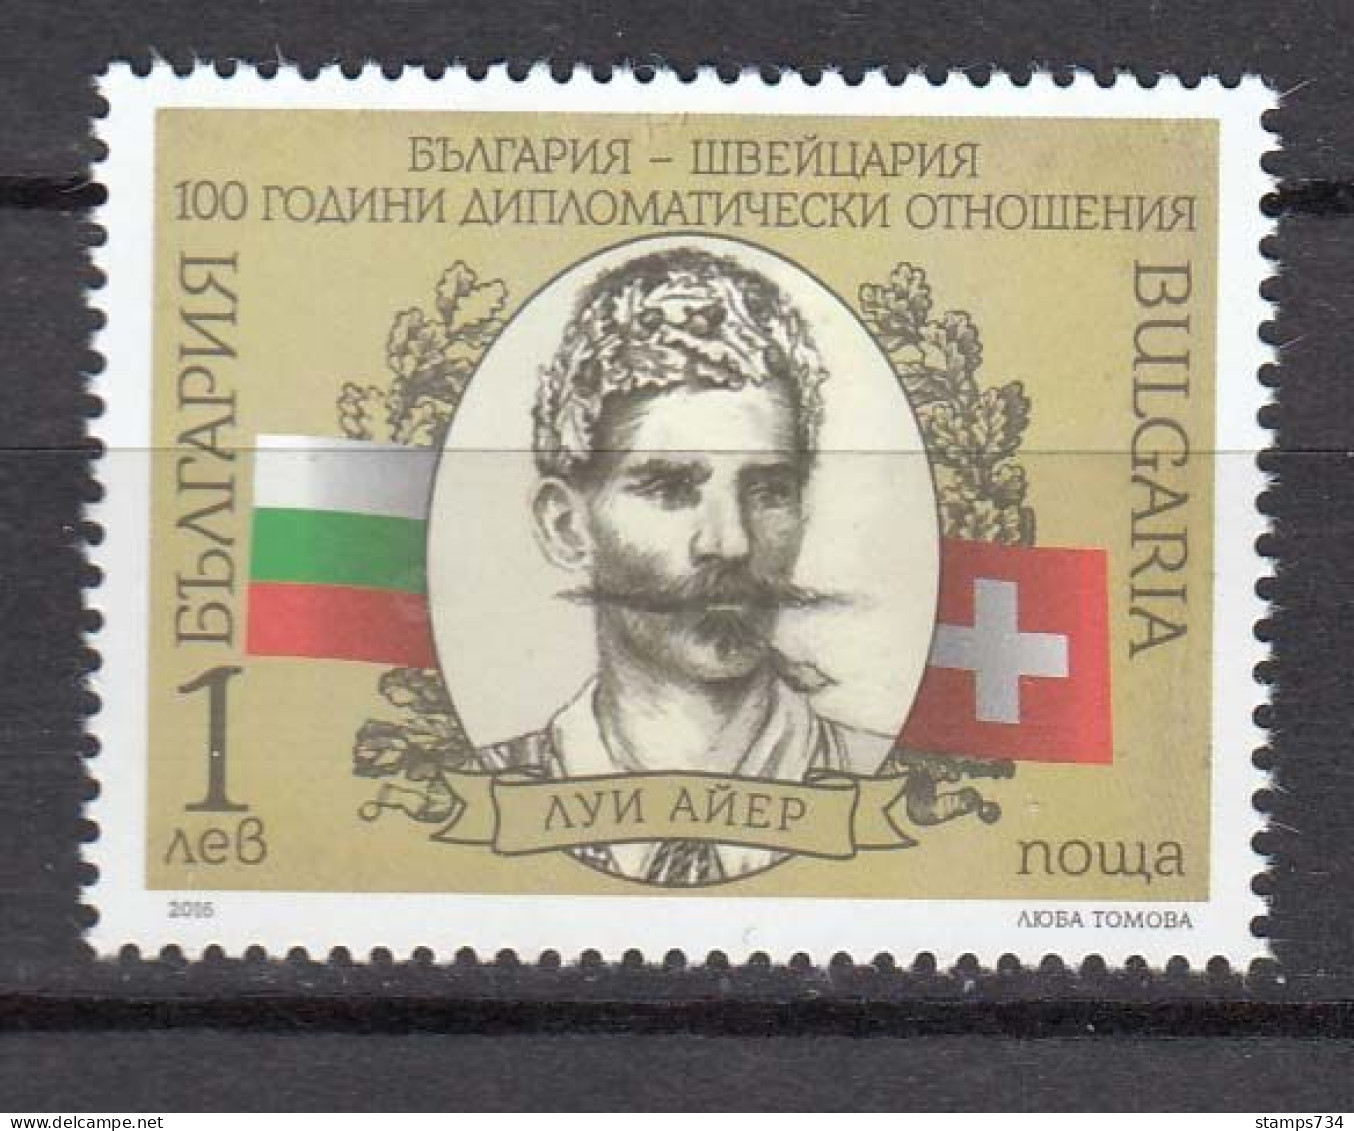 Bulgaria 2016 - 100 Years Of Diplomatic Relations With Switzerland, Mi-Nr. 5291, MNH** - Ungebraucht